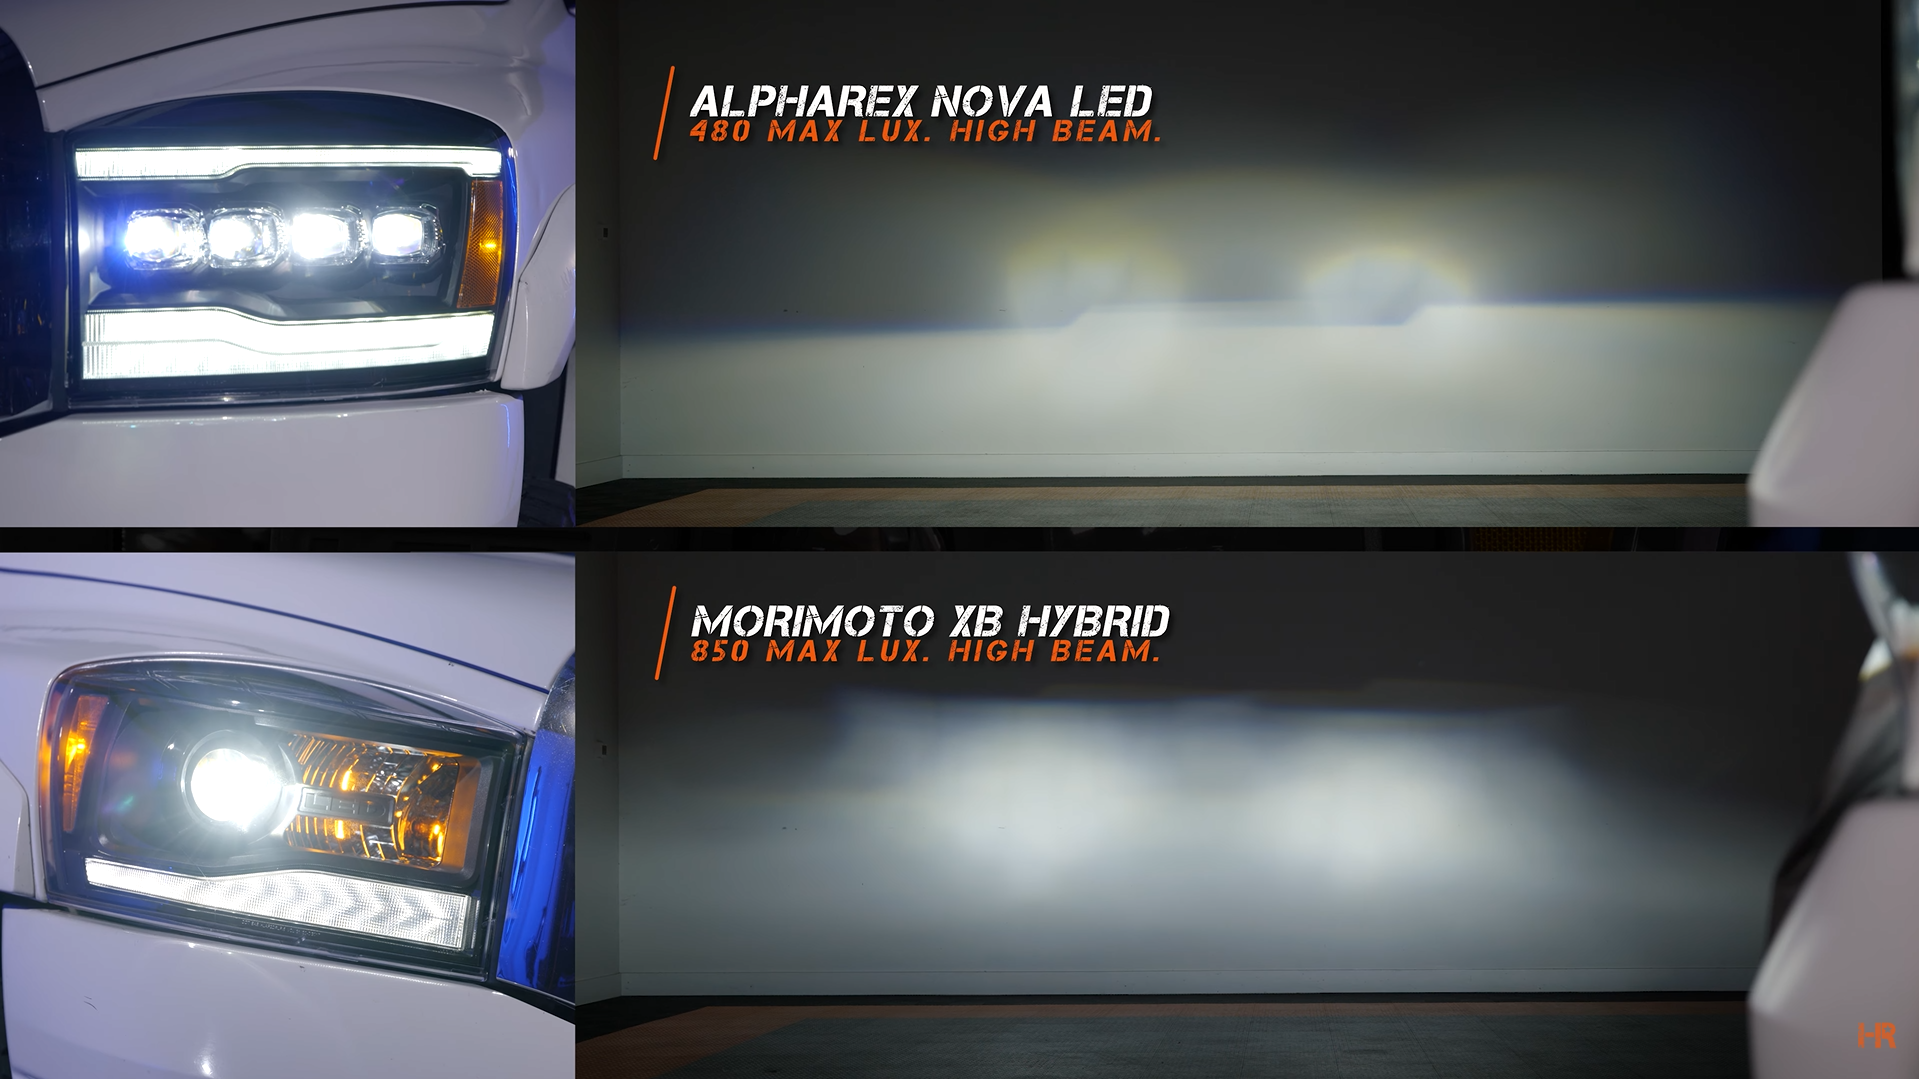 A comparison of brightness between the Alpharex Nova LED and the Morimoto XB Hybrid headlights.